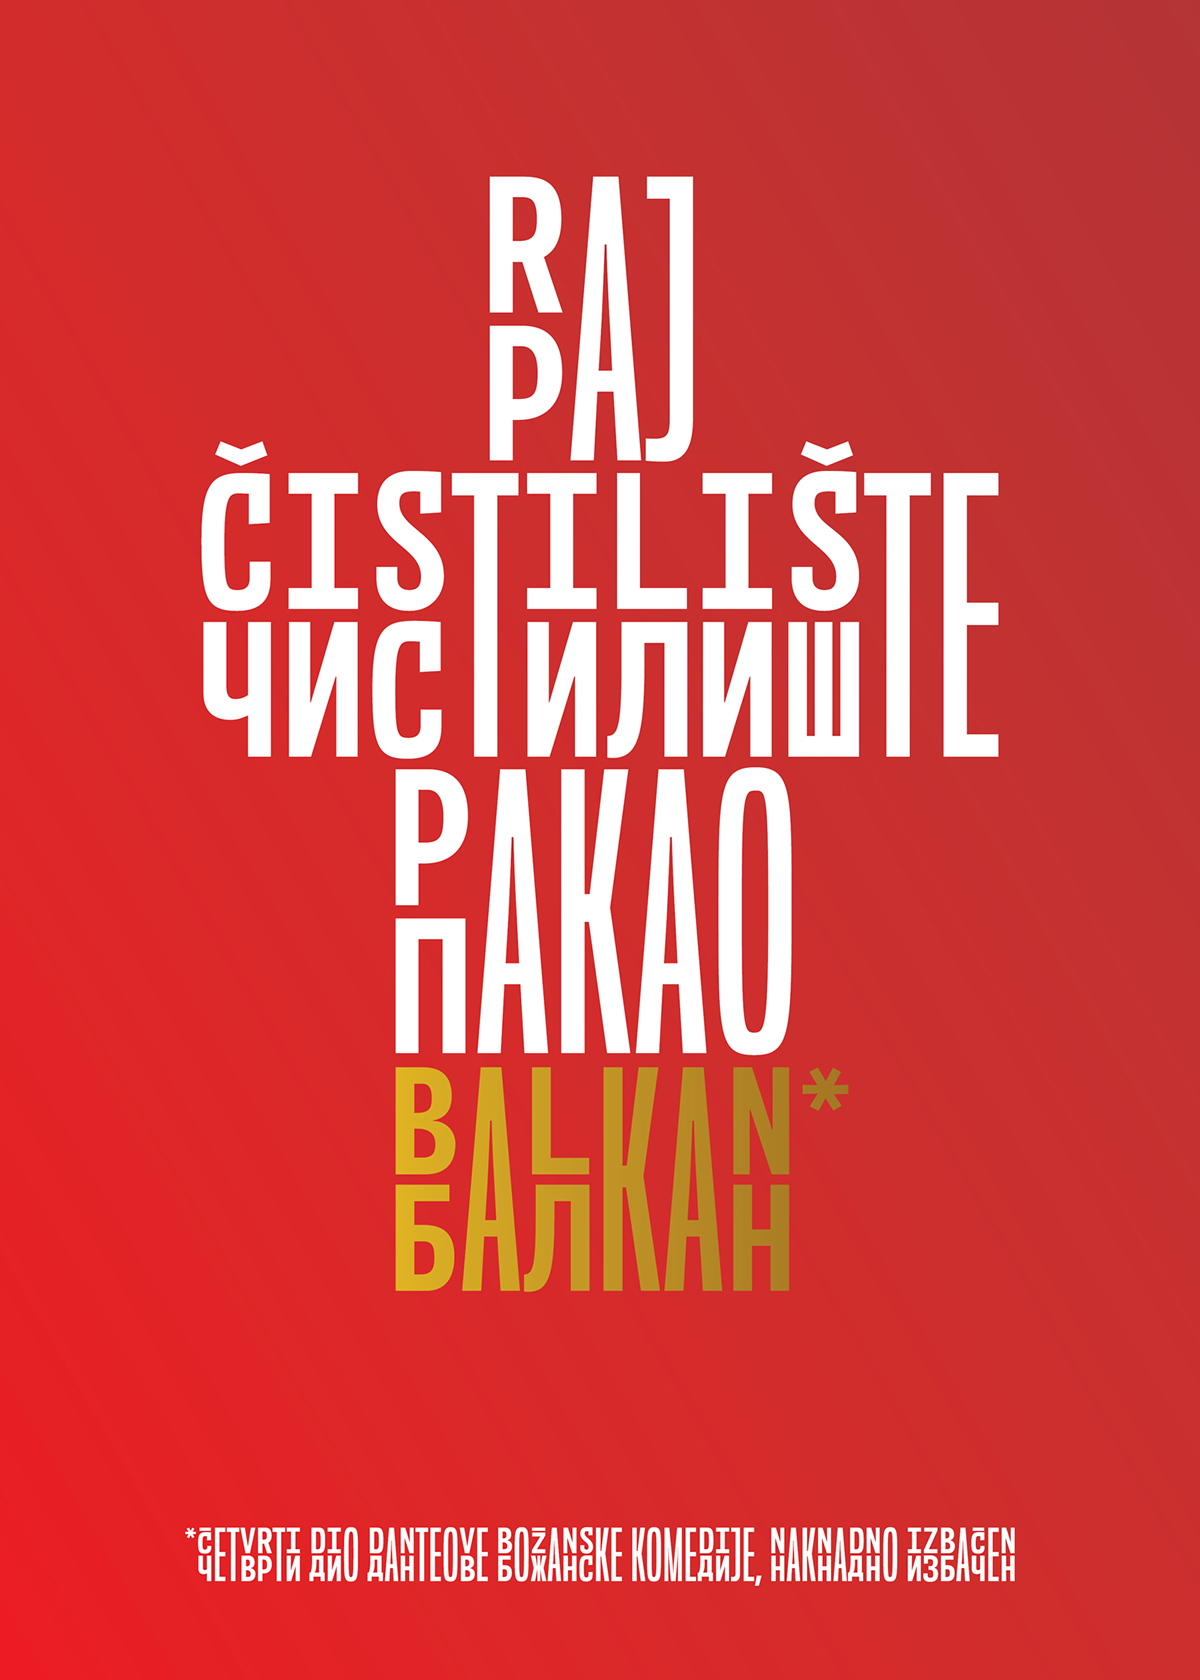 typo system Balkan type design Typonine marija juza